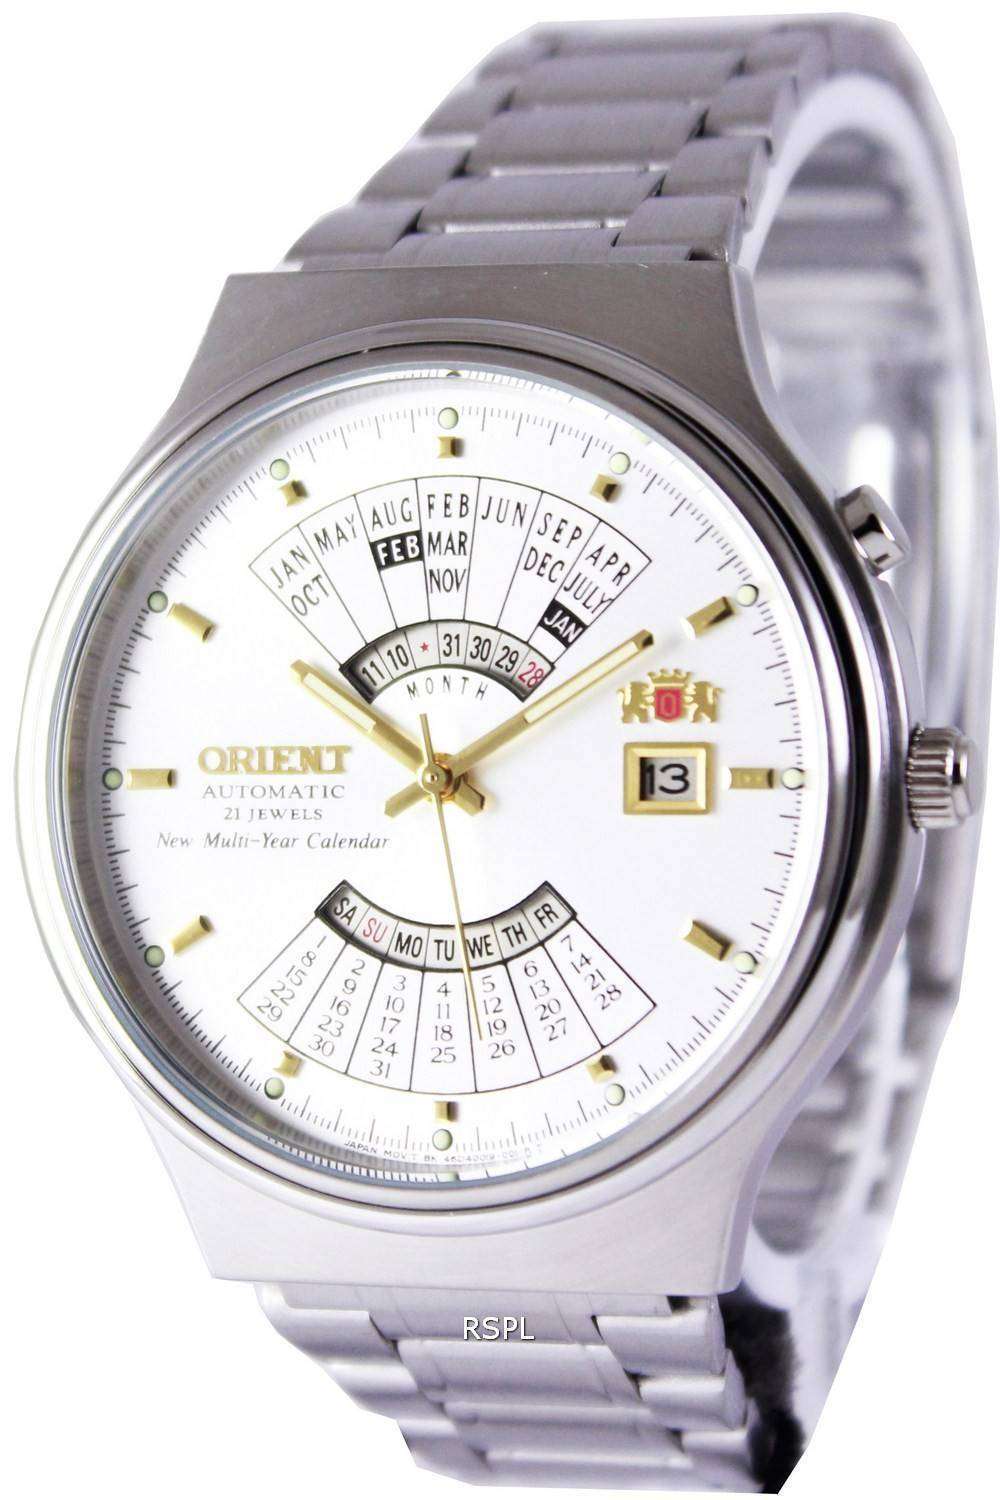 Orient Automatic 21 Jewels Multi Year Calendar FEU00002WW Men's Watch